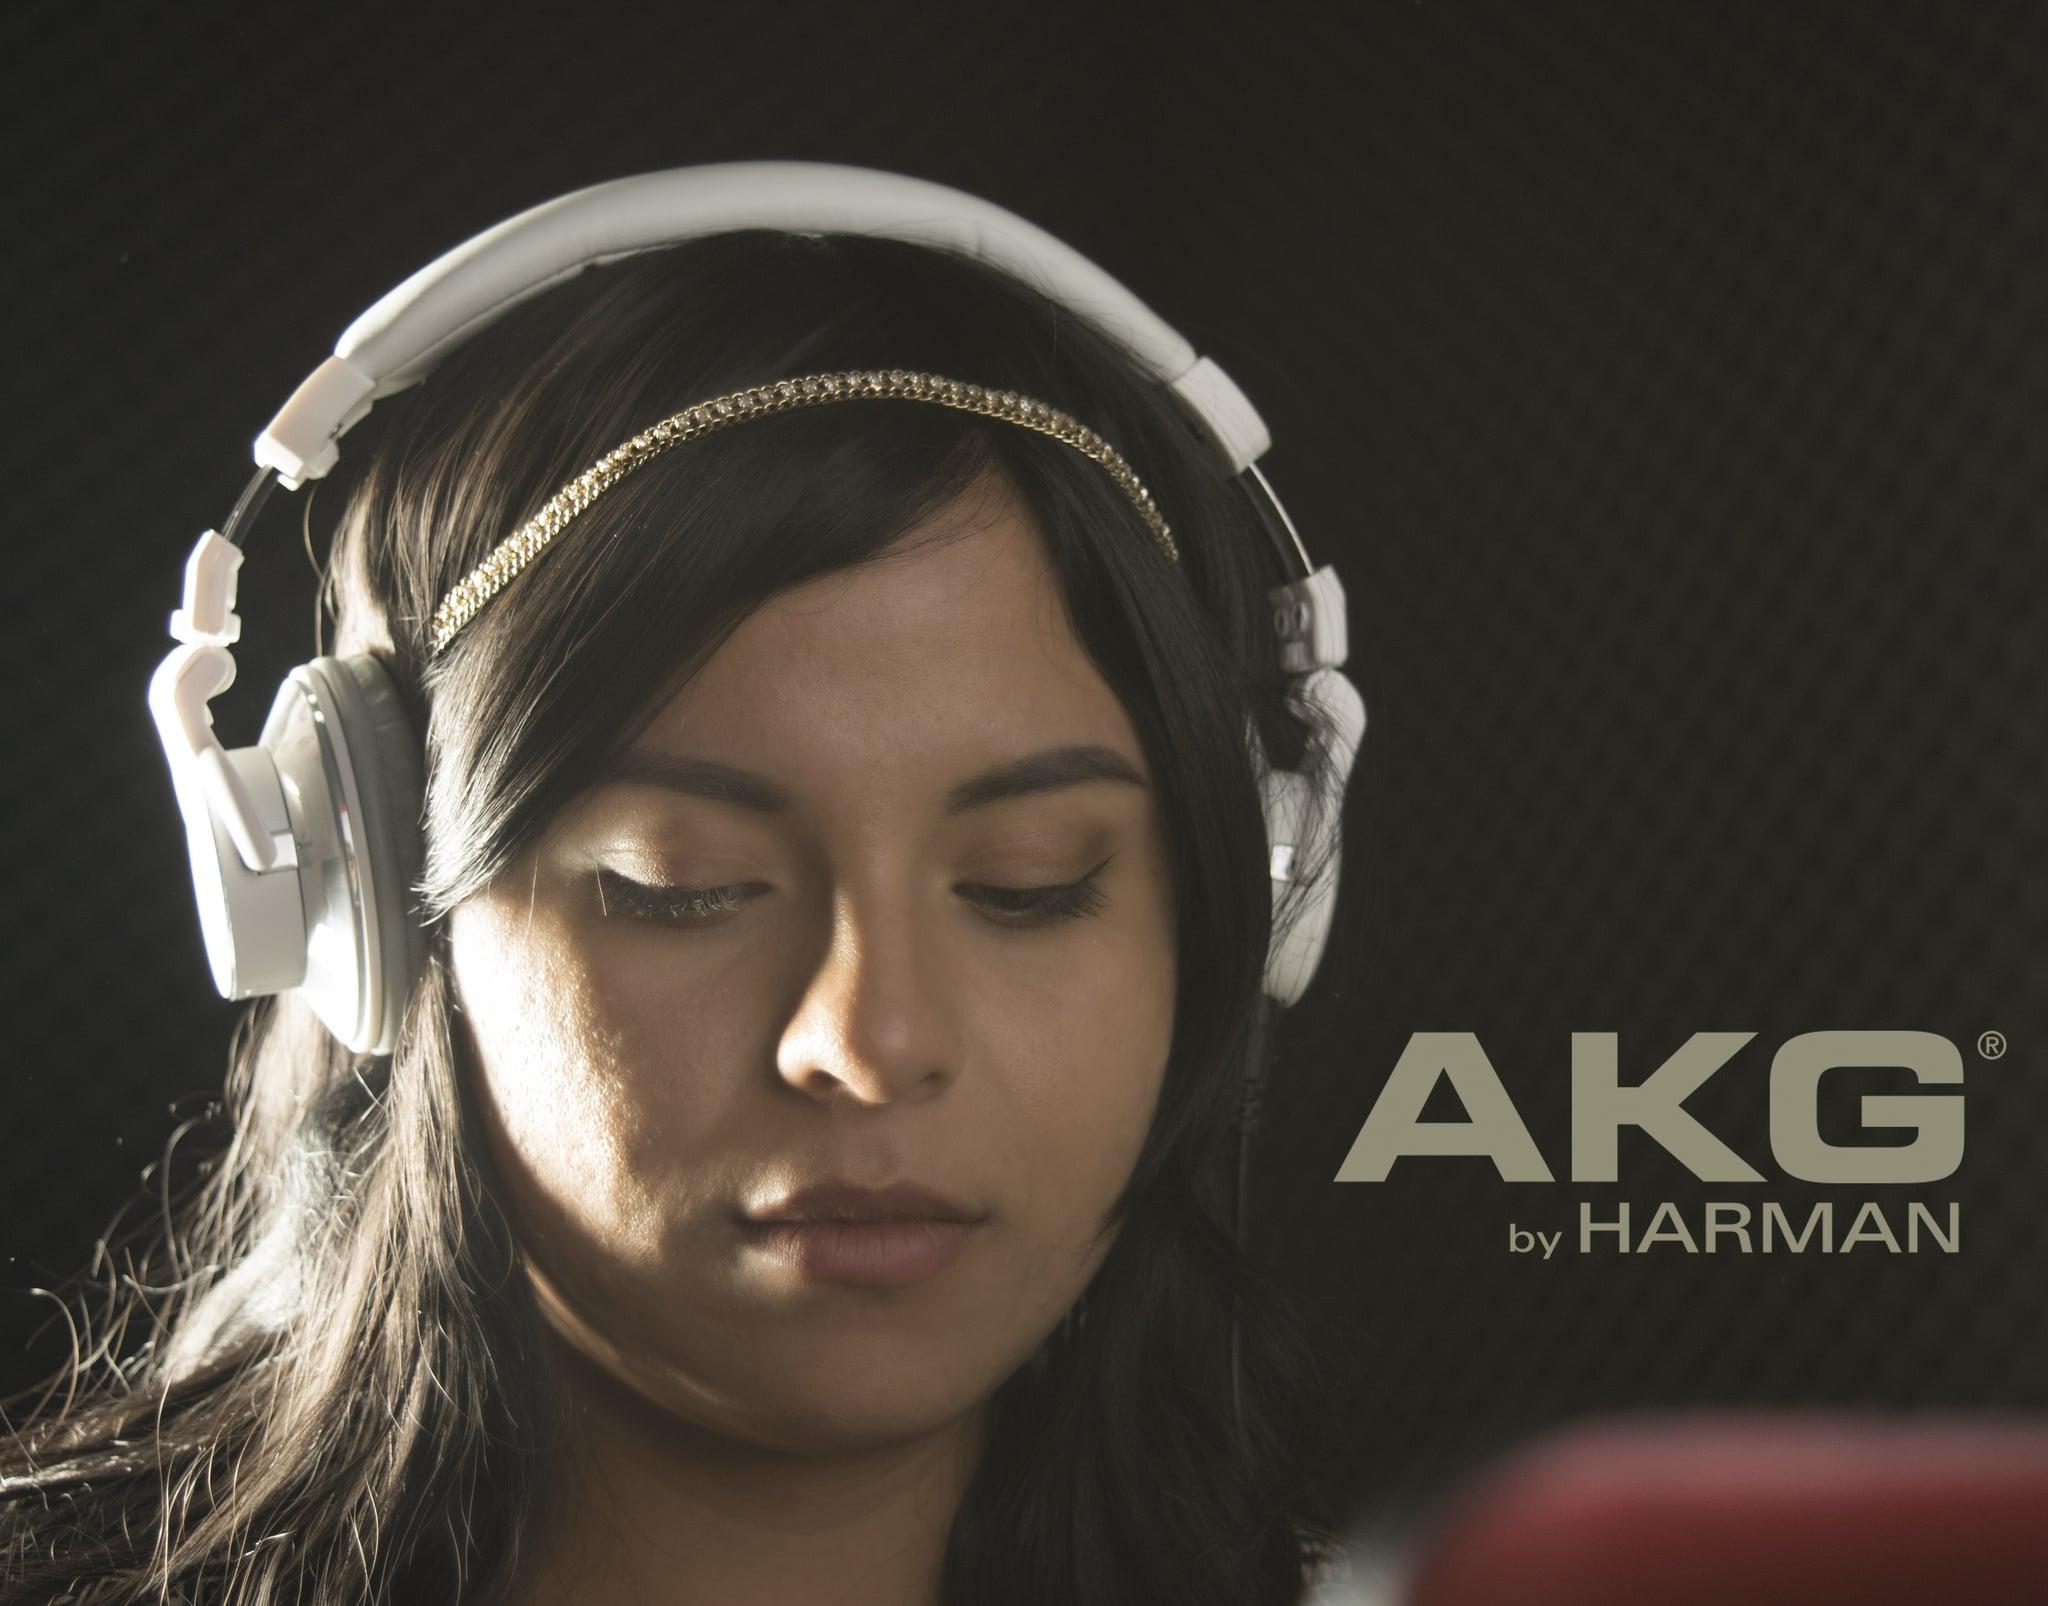 AKG Headphones HD wallpaper free Download